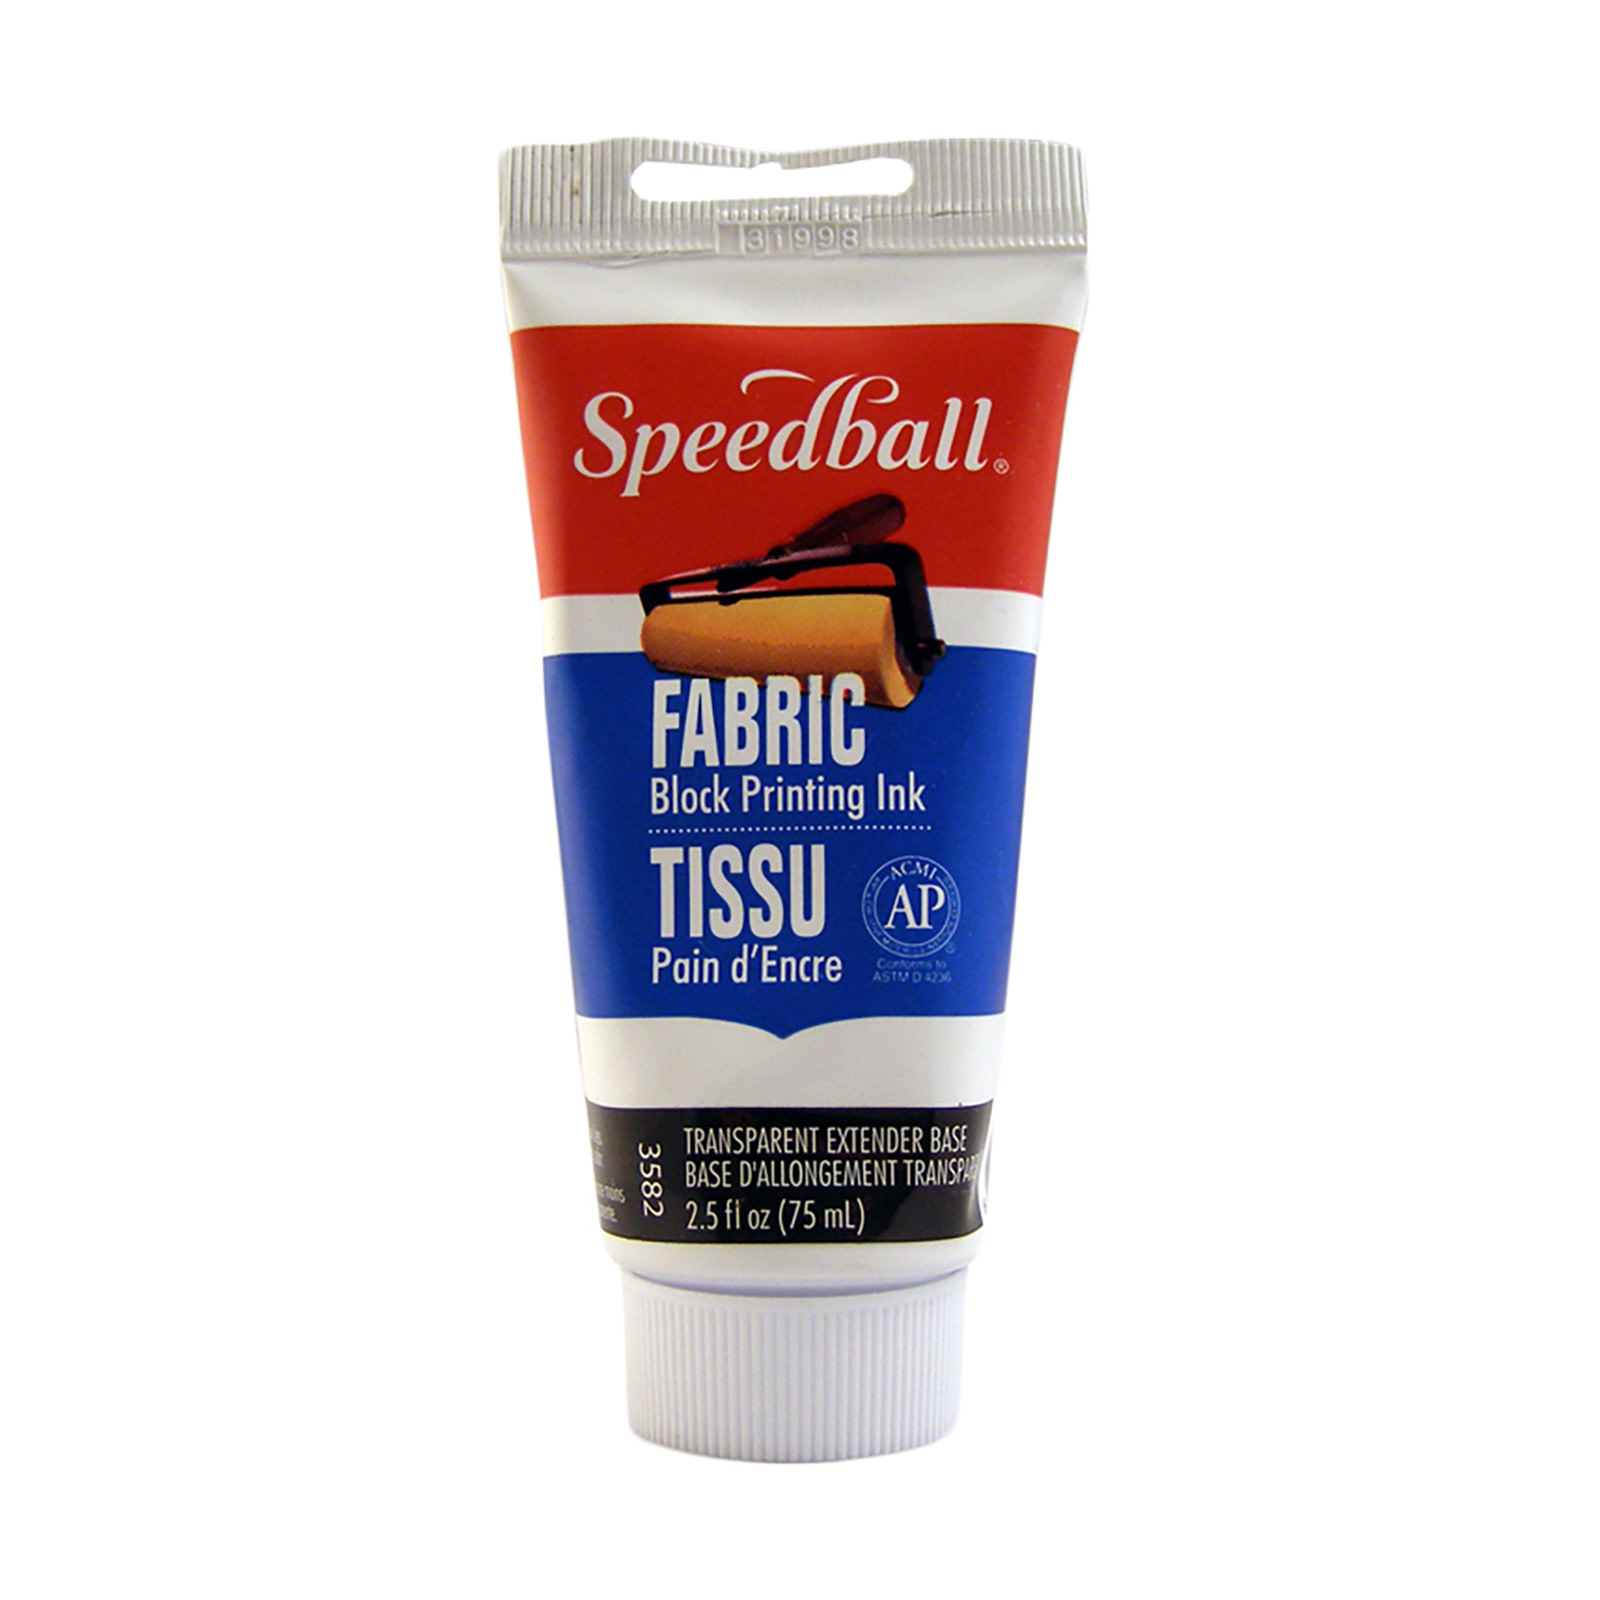 Speedball Printing Inks for Fabrics, 2.5 oz., Transparent Extender